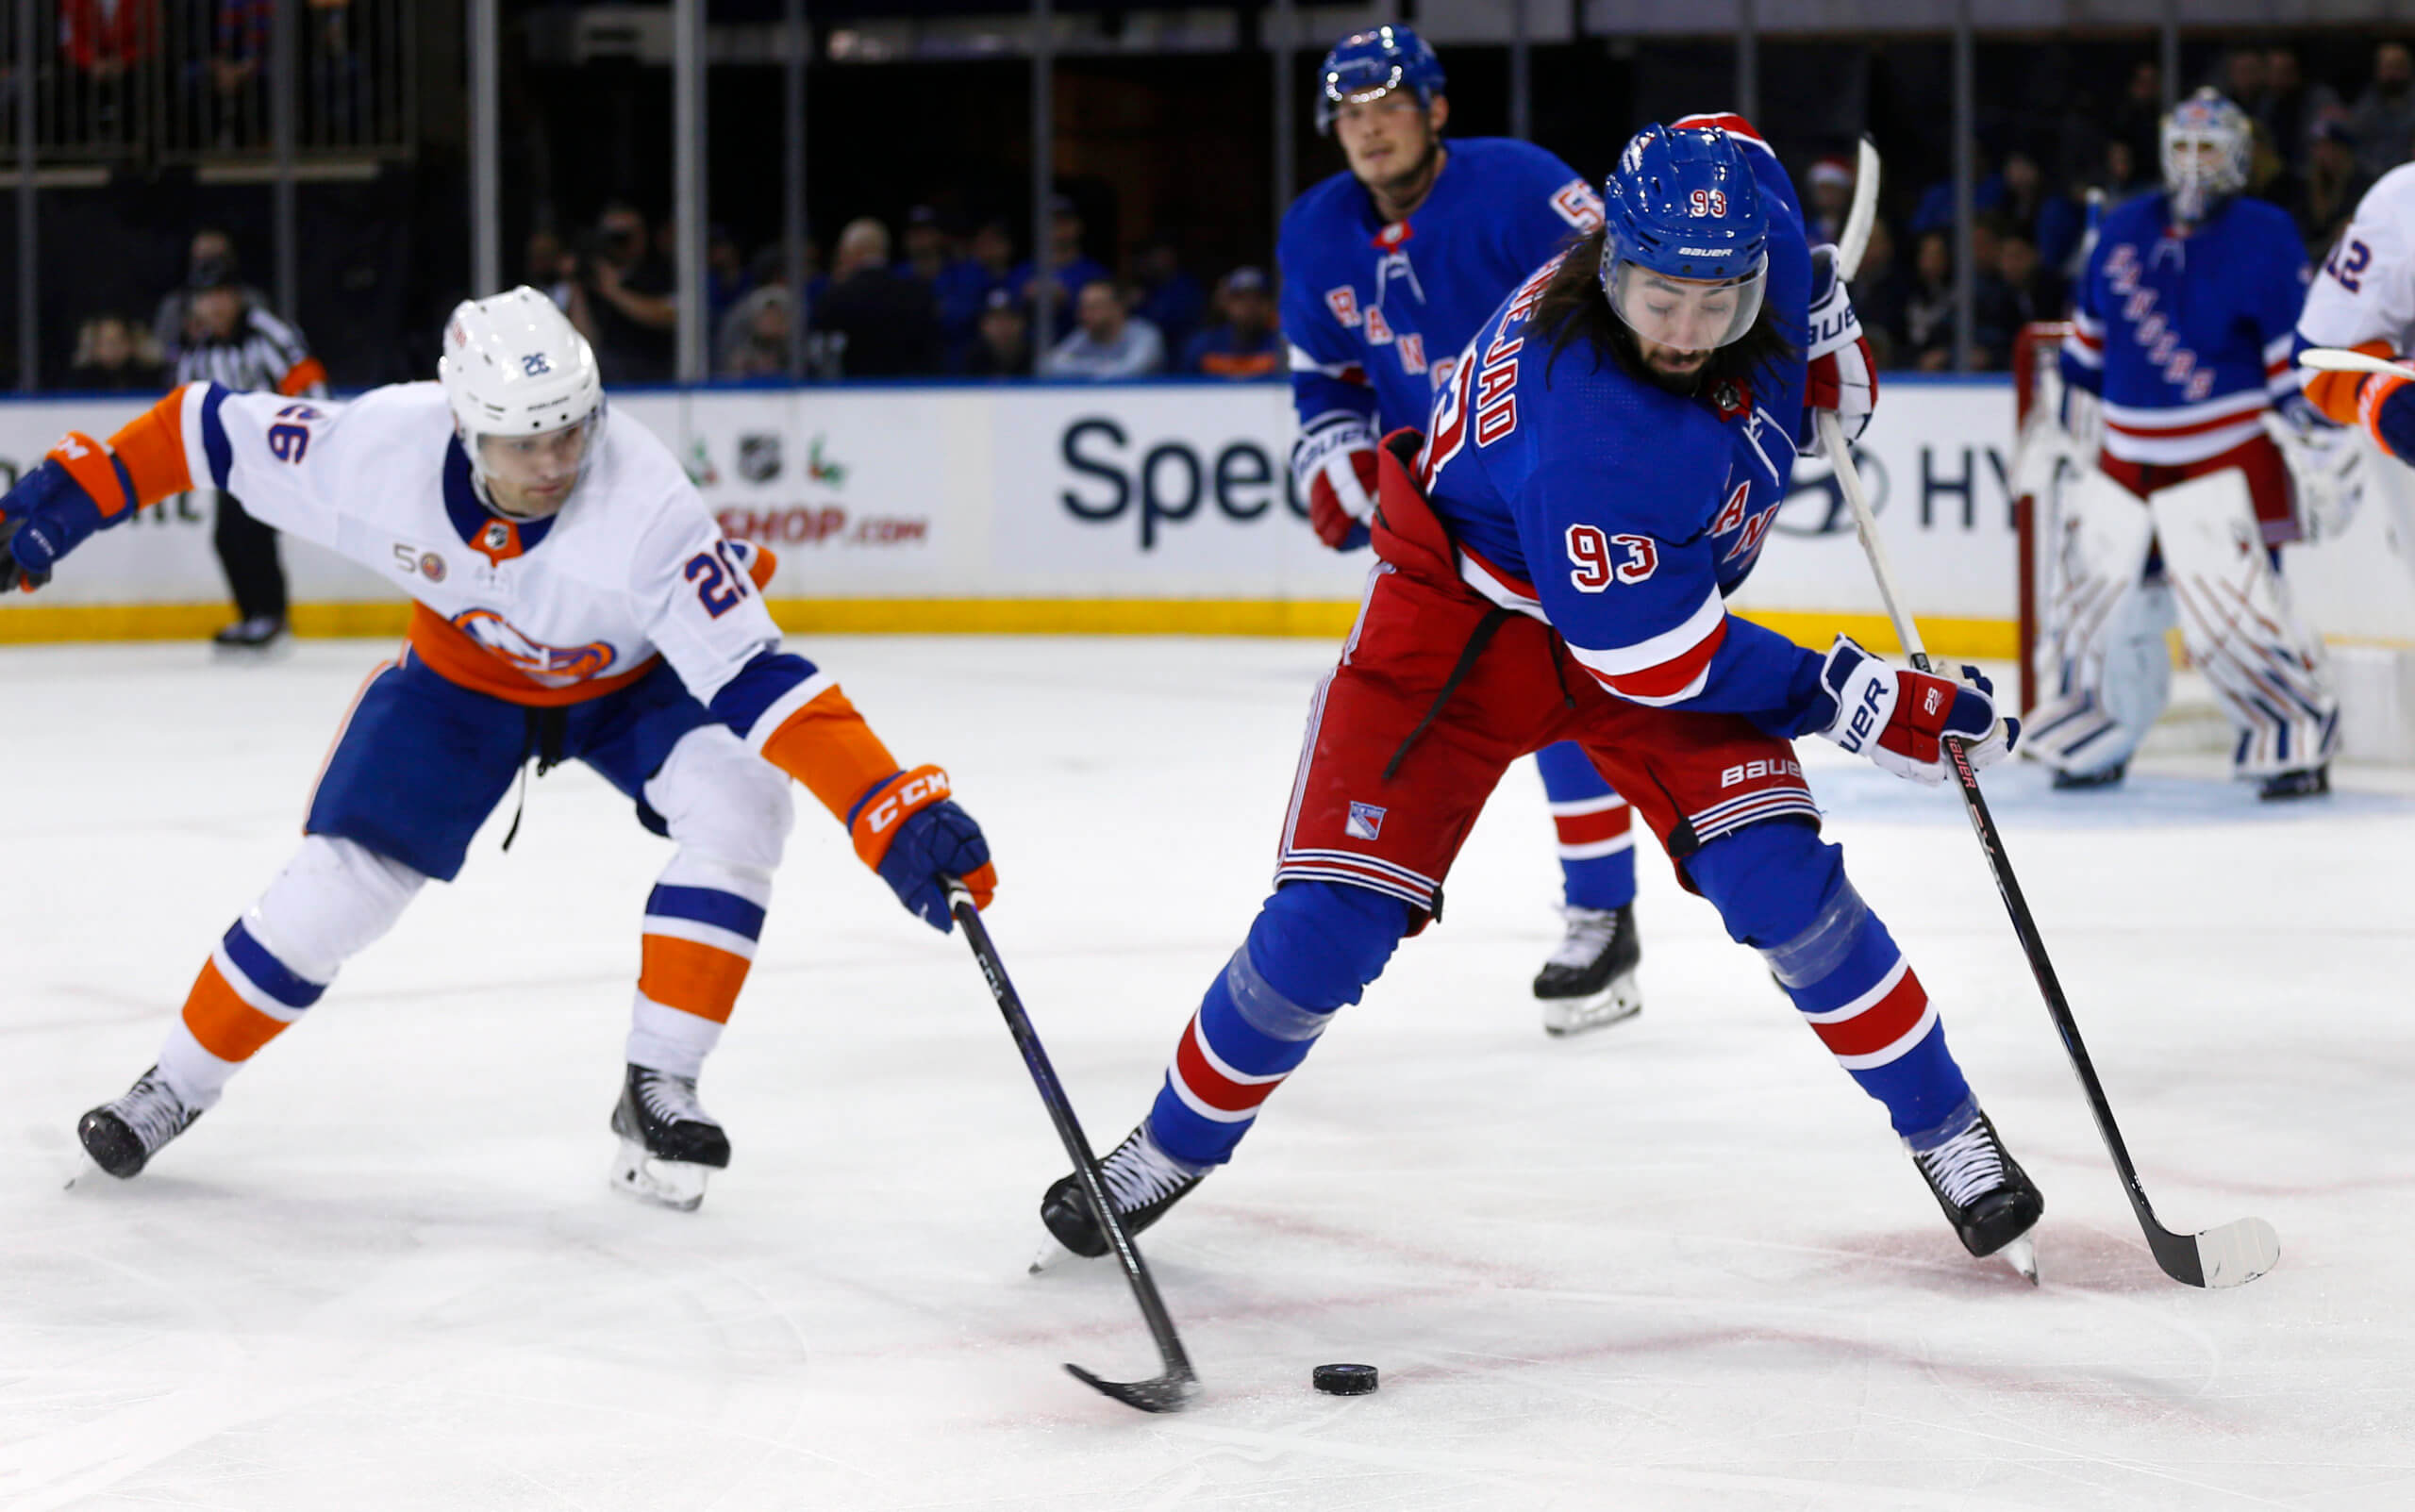 Start time for NY Islanders vs. NY Rangers game at MetLife Stadium revealed